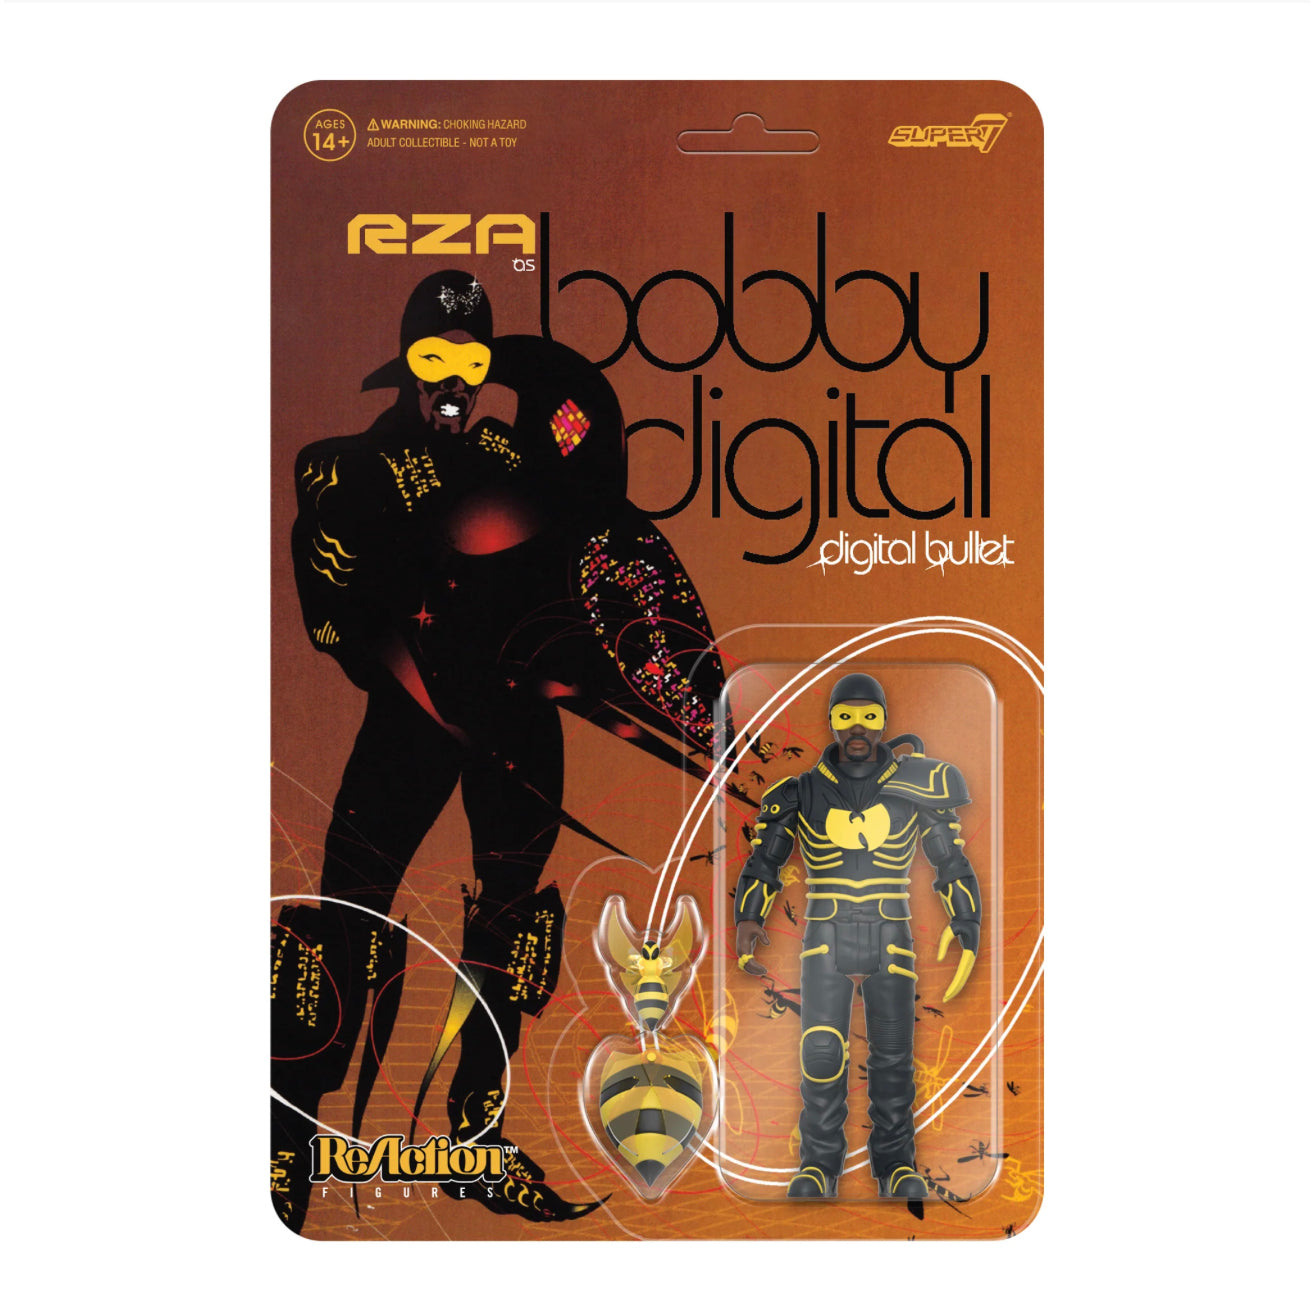 Super7 / RZA Bobby Digital - Digital Bullet figure